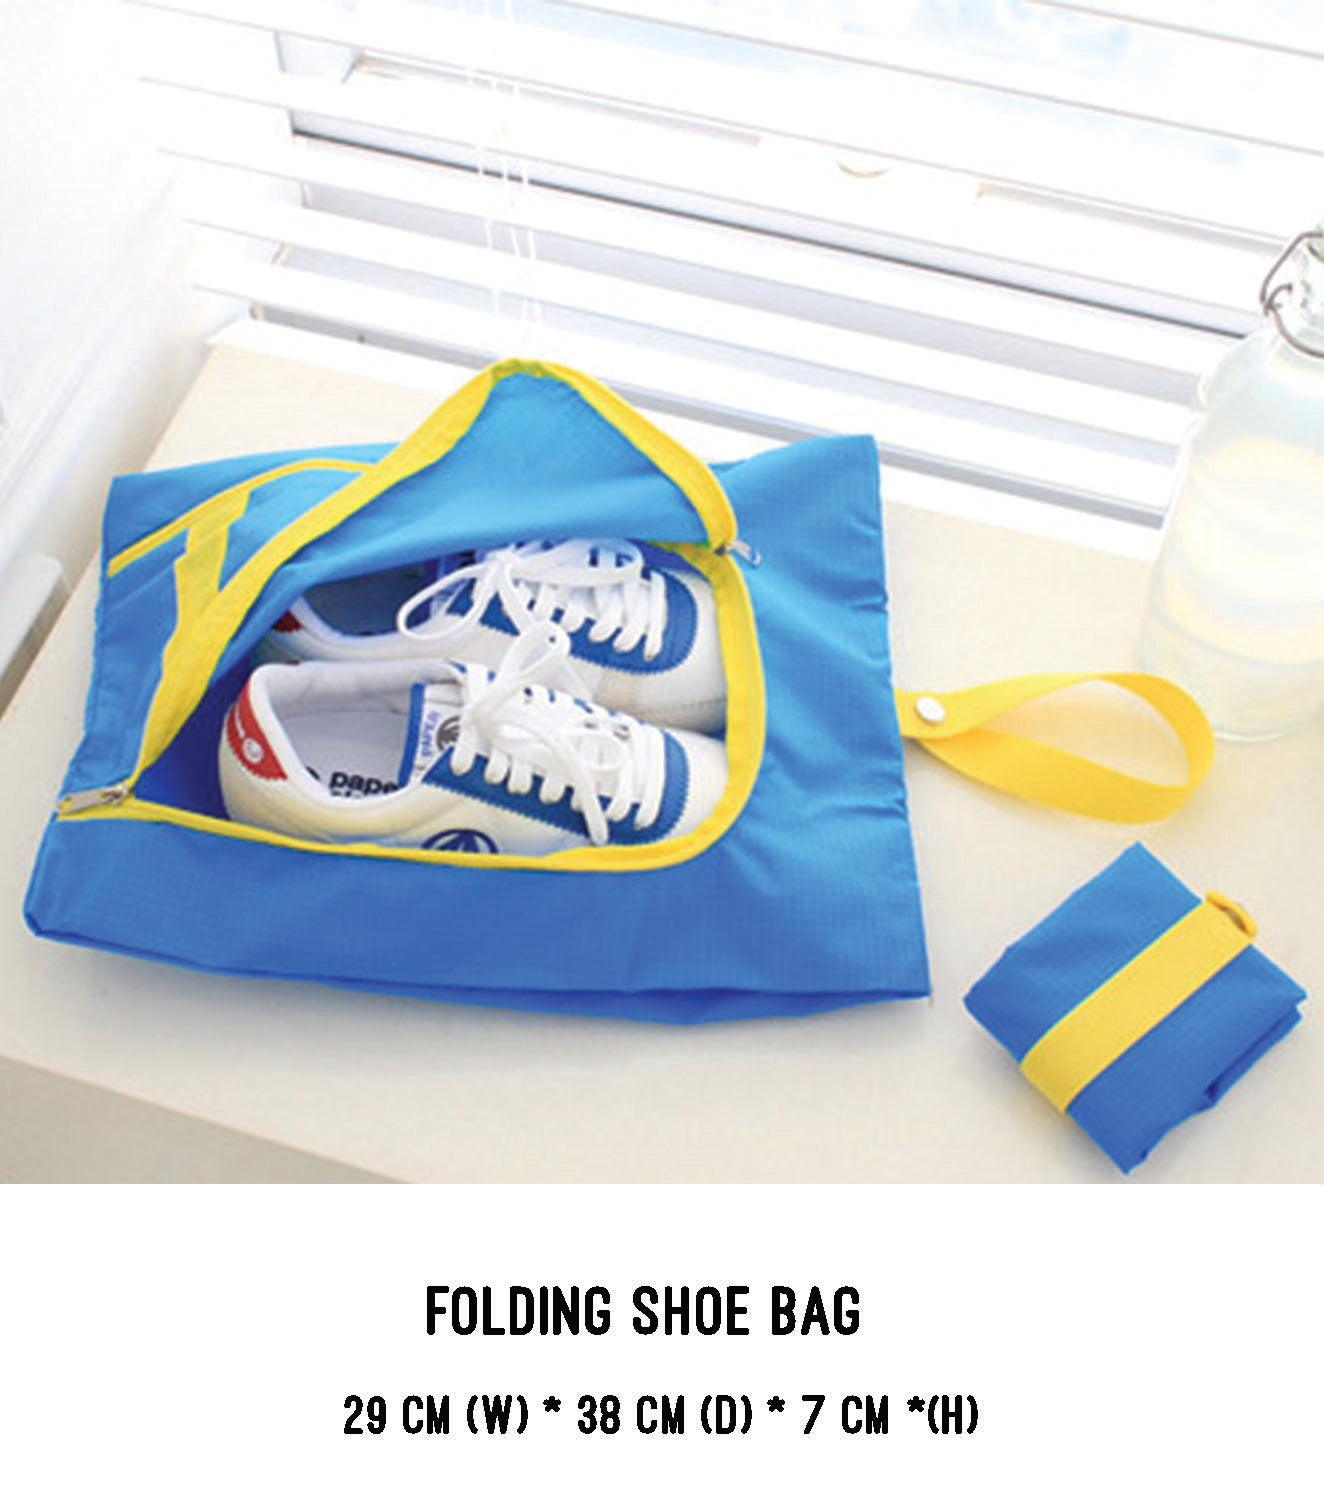 Water proof Shoe bag - wodarmour